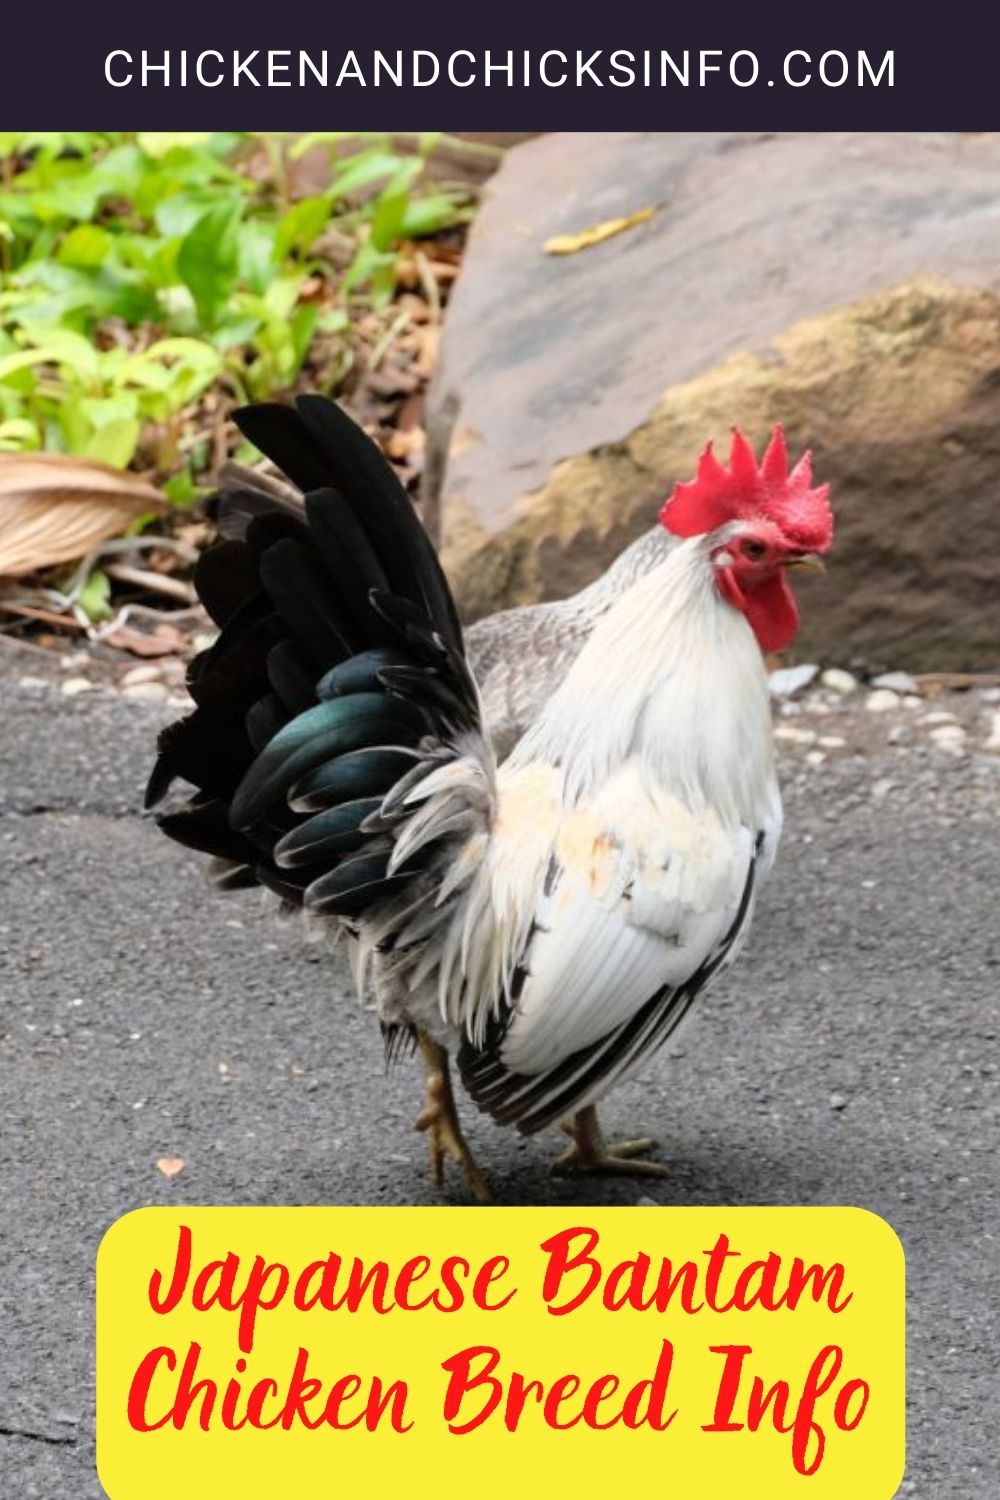 Japanese Bantam Chicken Breed Info + Where to Buy pinterest image.